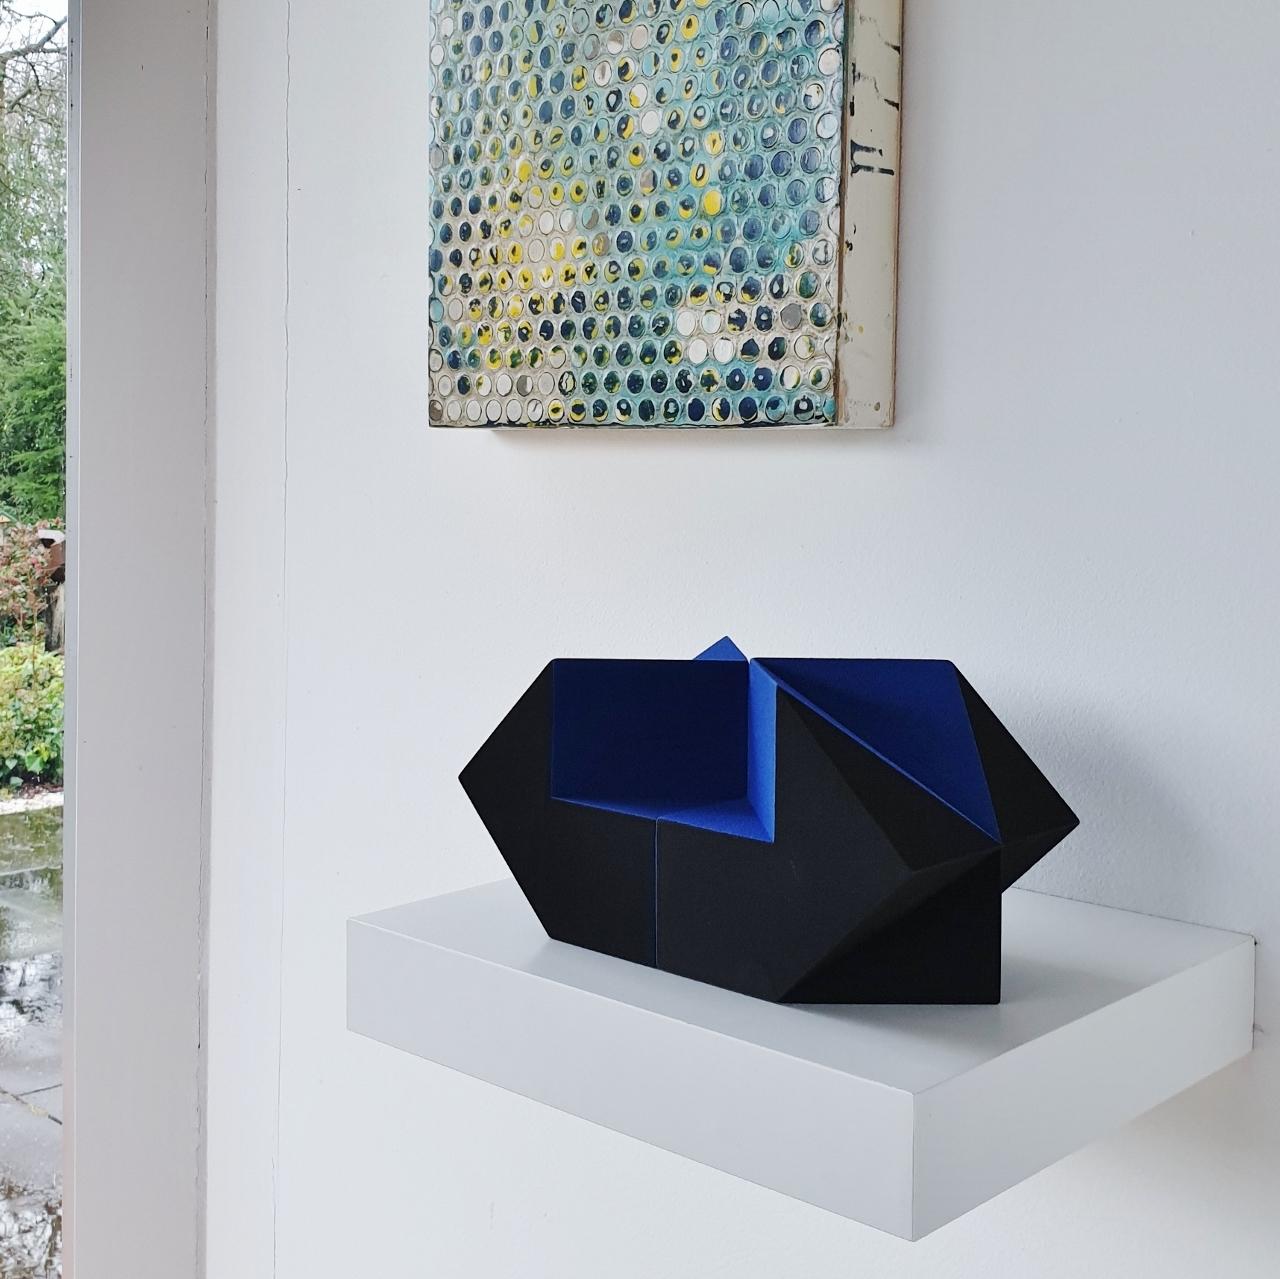 SC1403 blue - contemporary modern abstract geometric ceramic object sculpture - Sculpture by Let de Kok